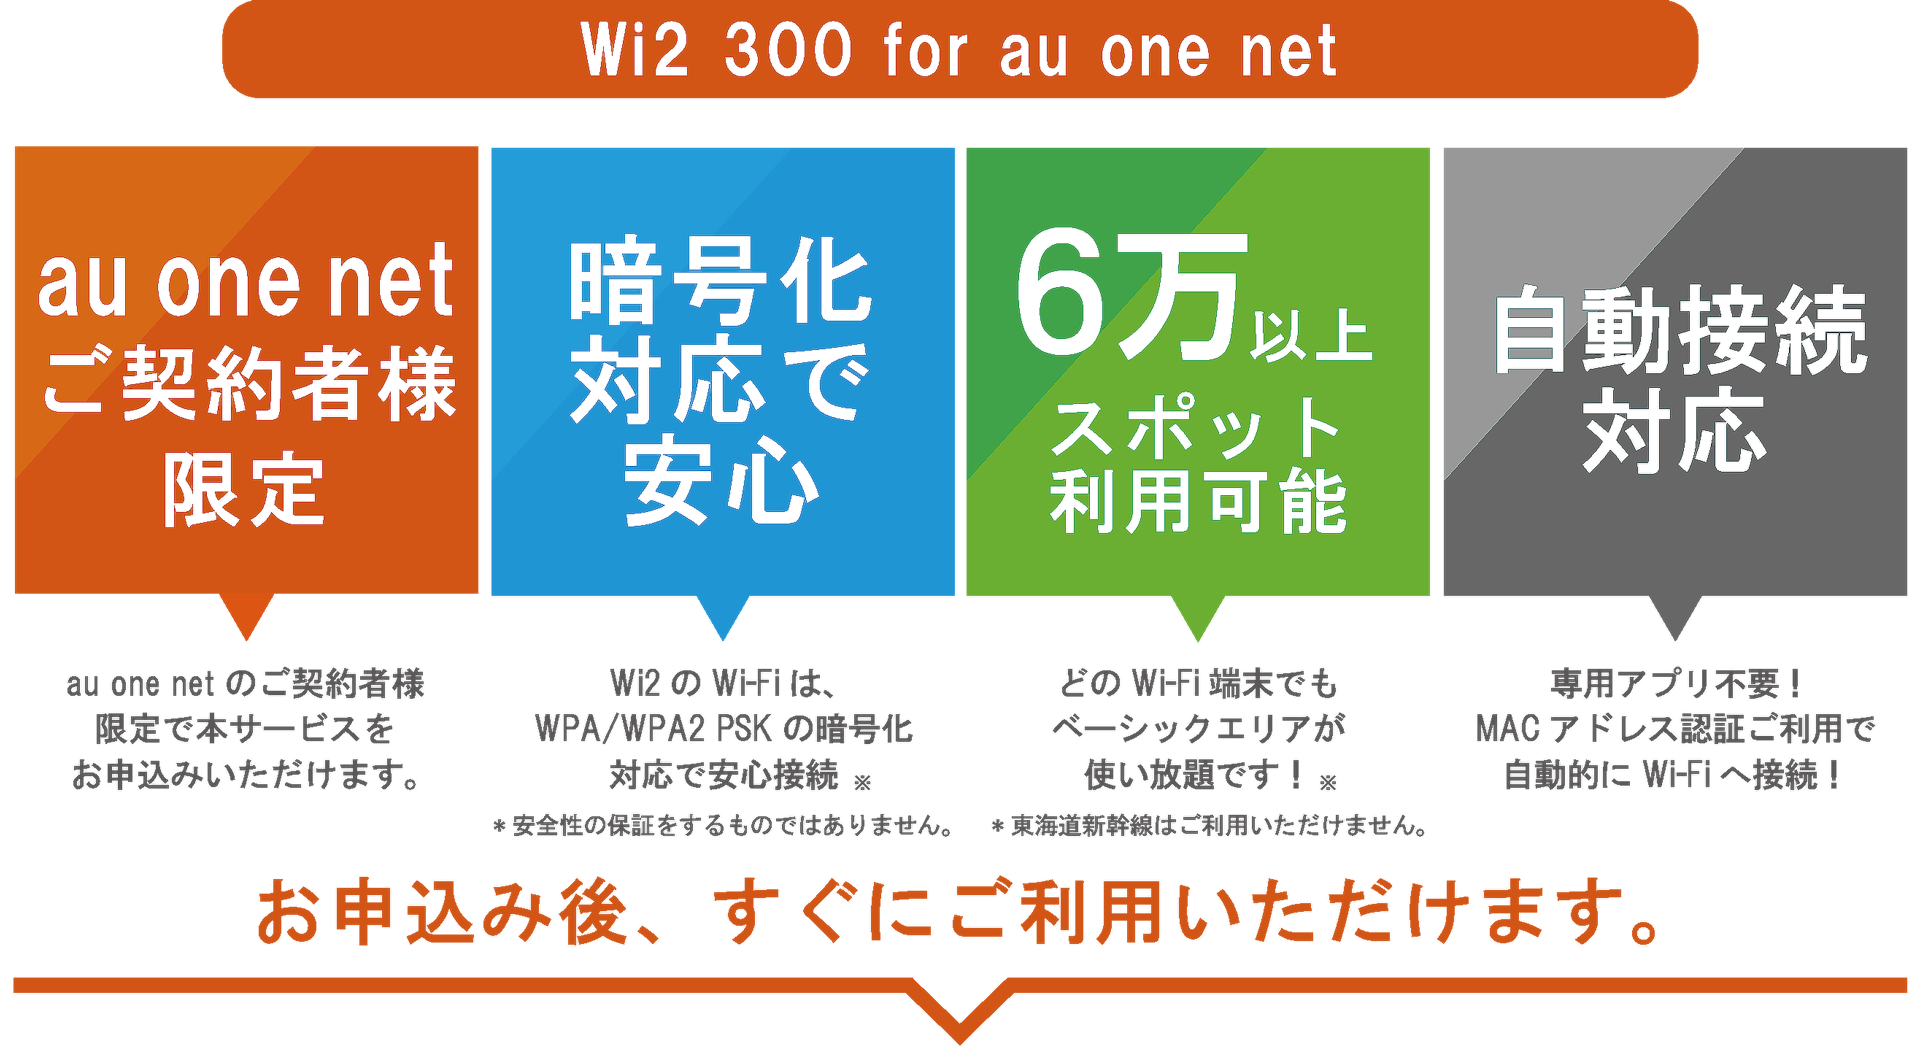 wi2 300 for au multi-device service